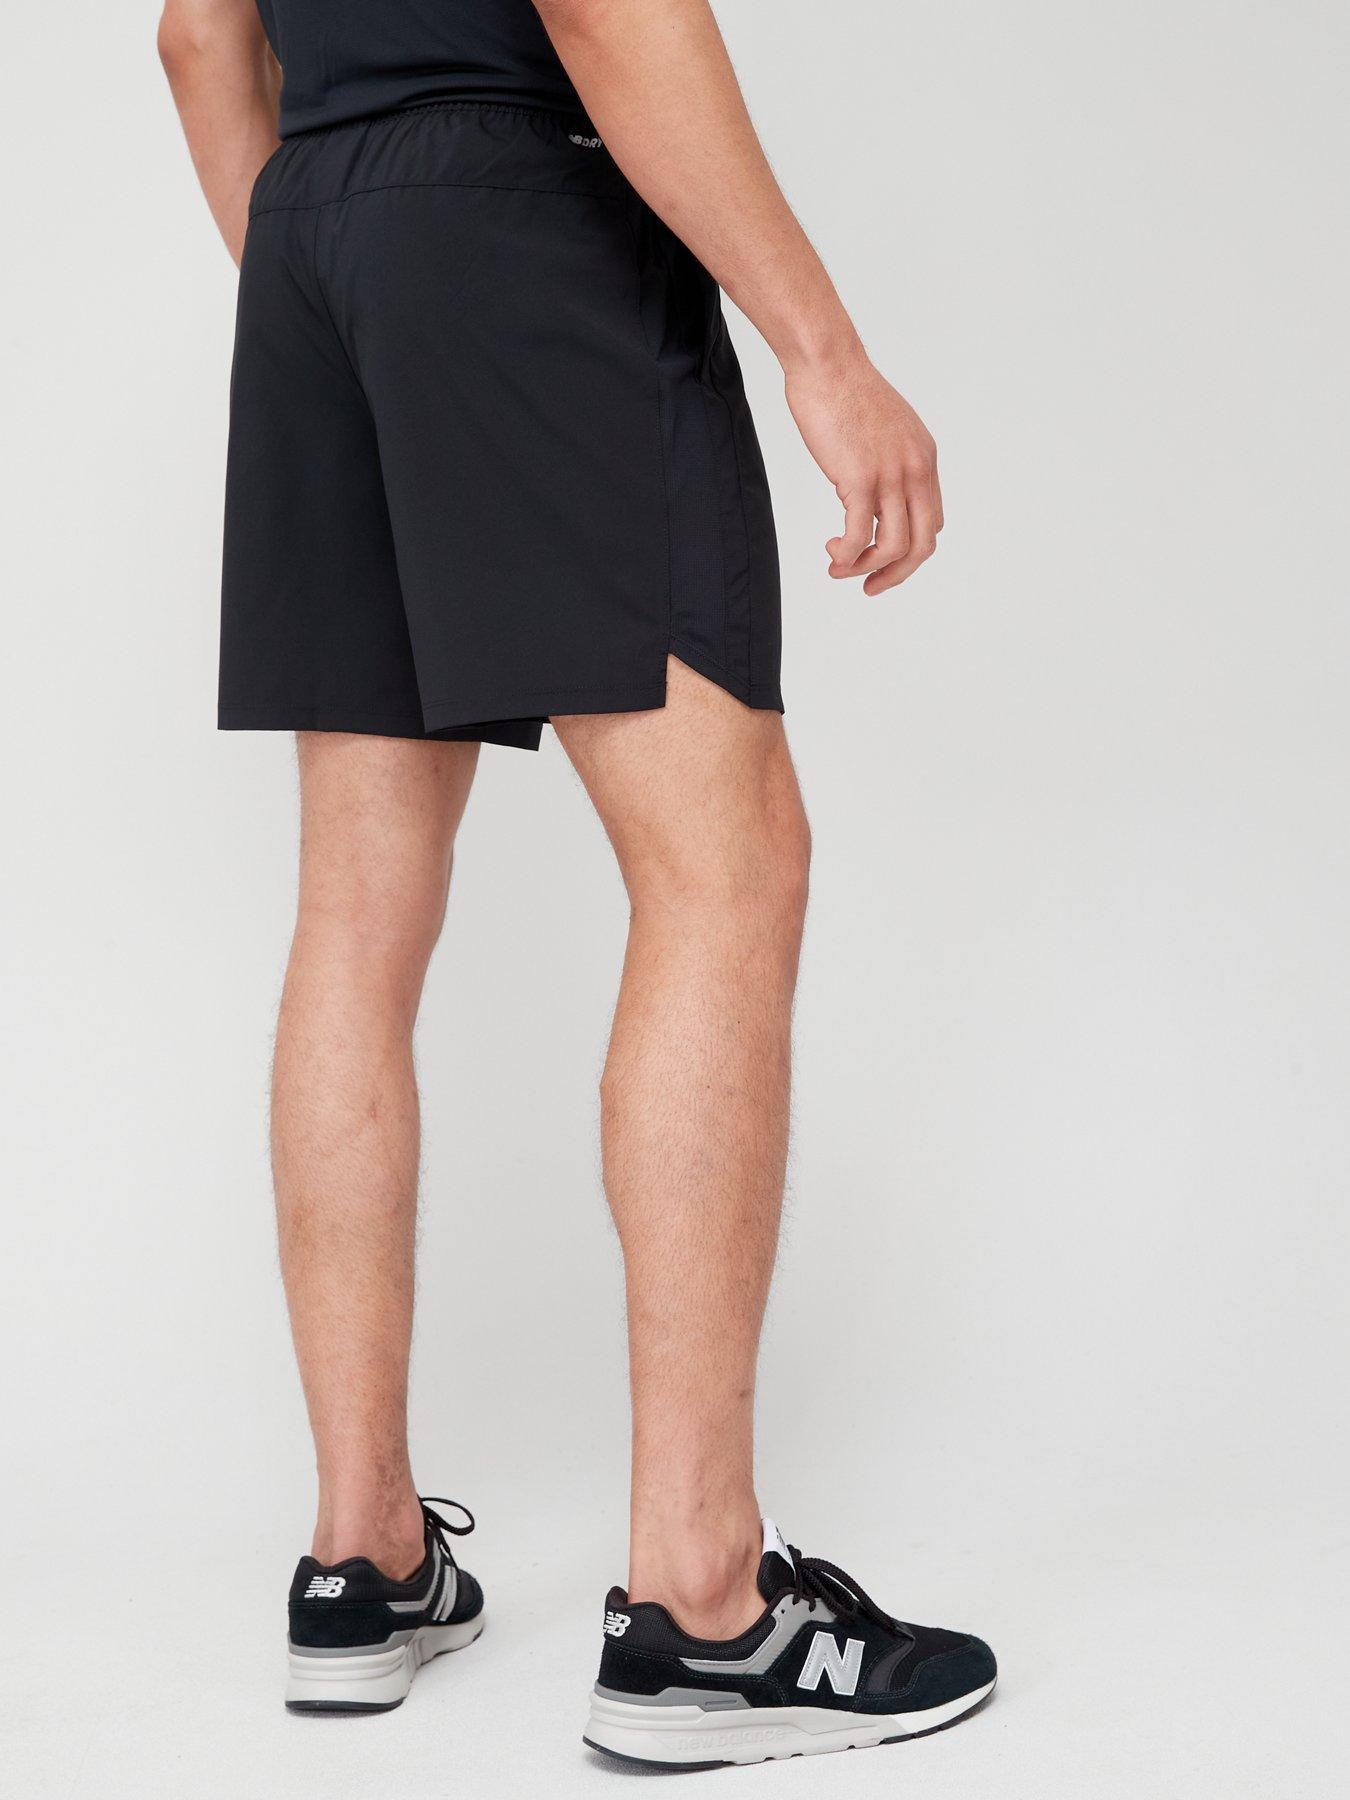 New Balance Men's Accelerate 3 Inch Split Short, Black, X-Large :  : Clothing, Shoes & Accessories